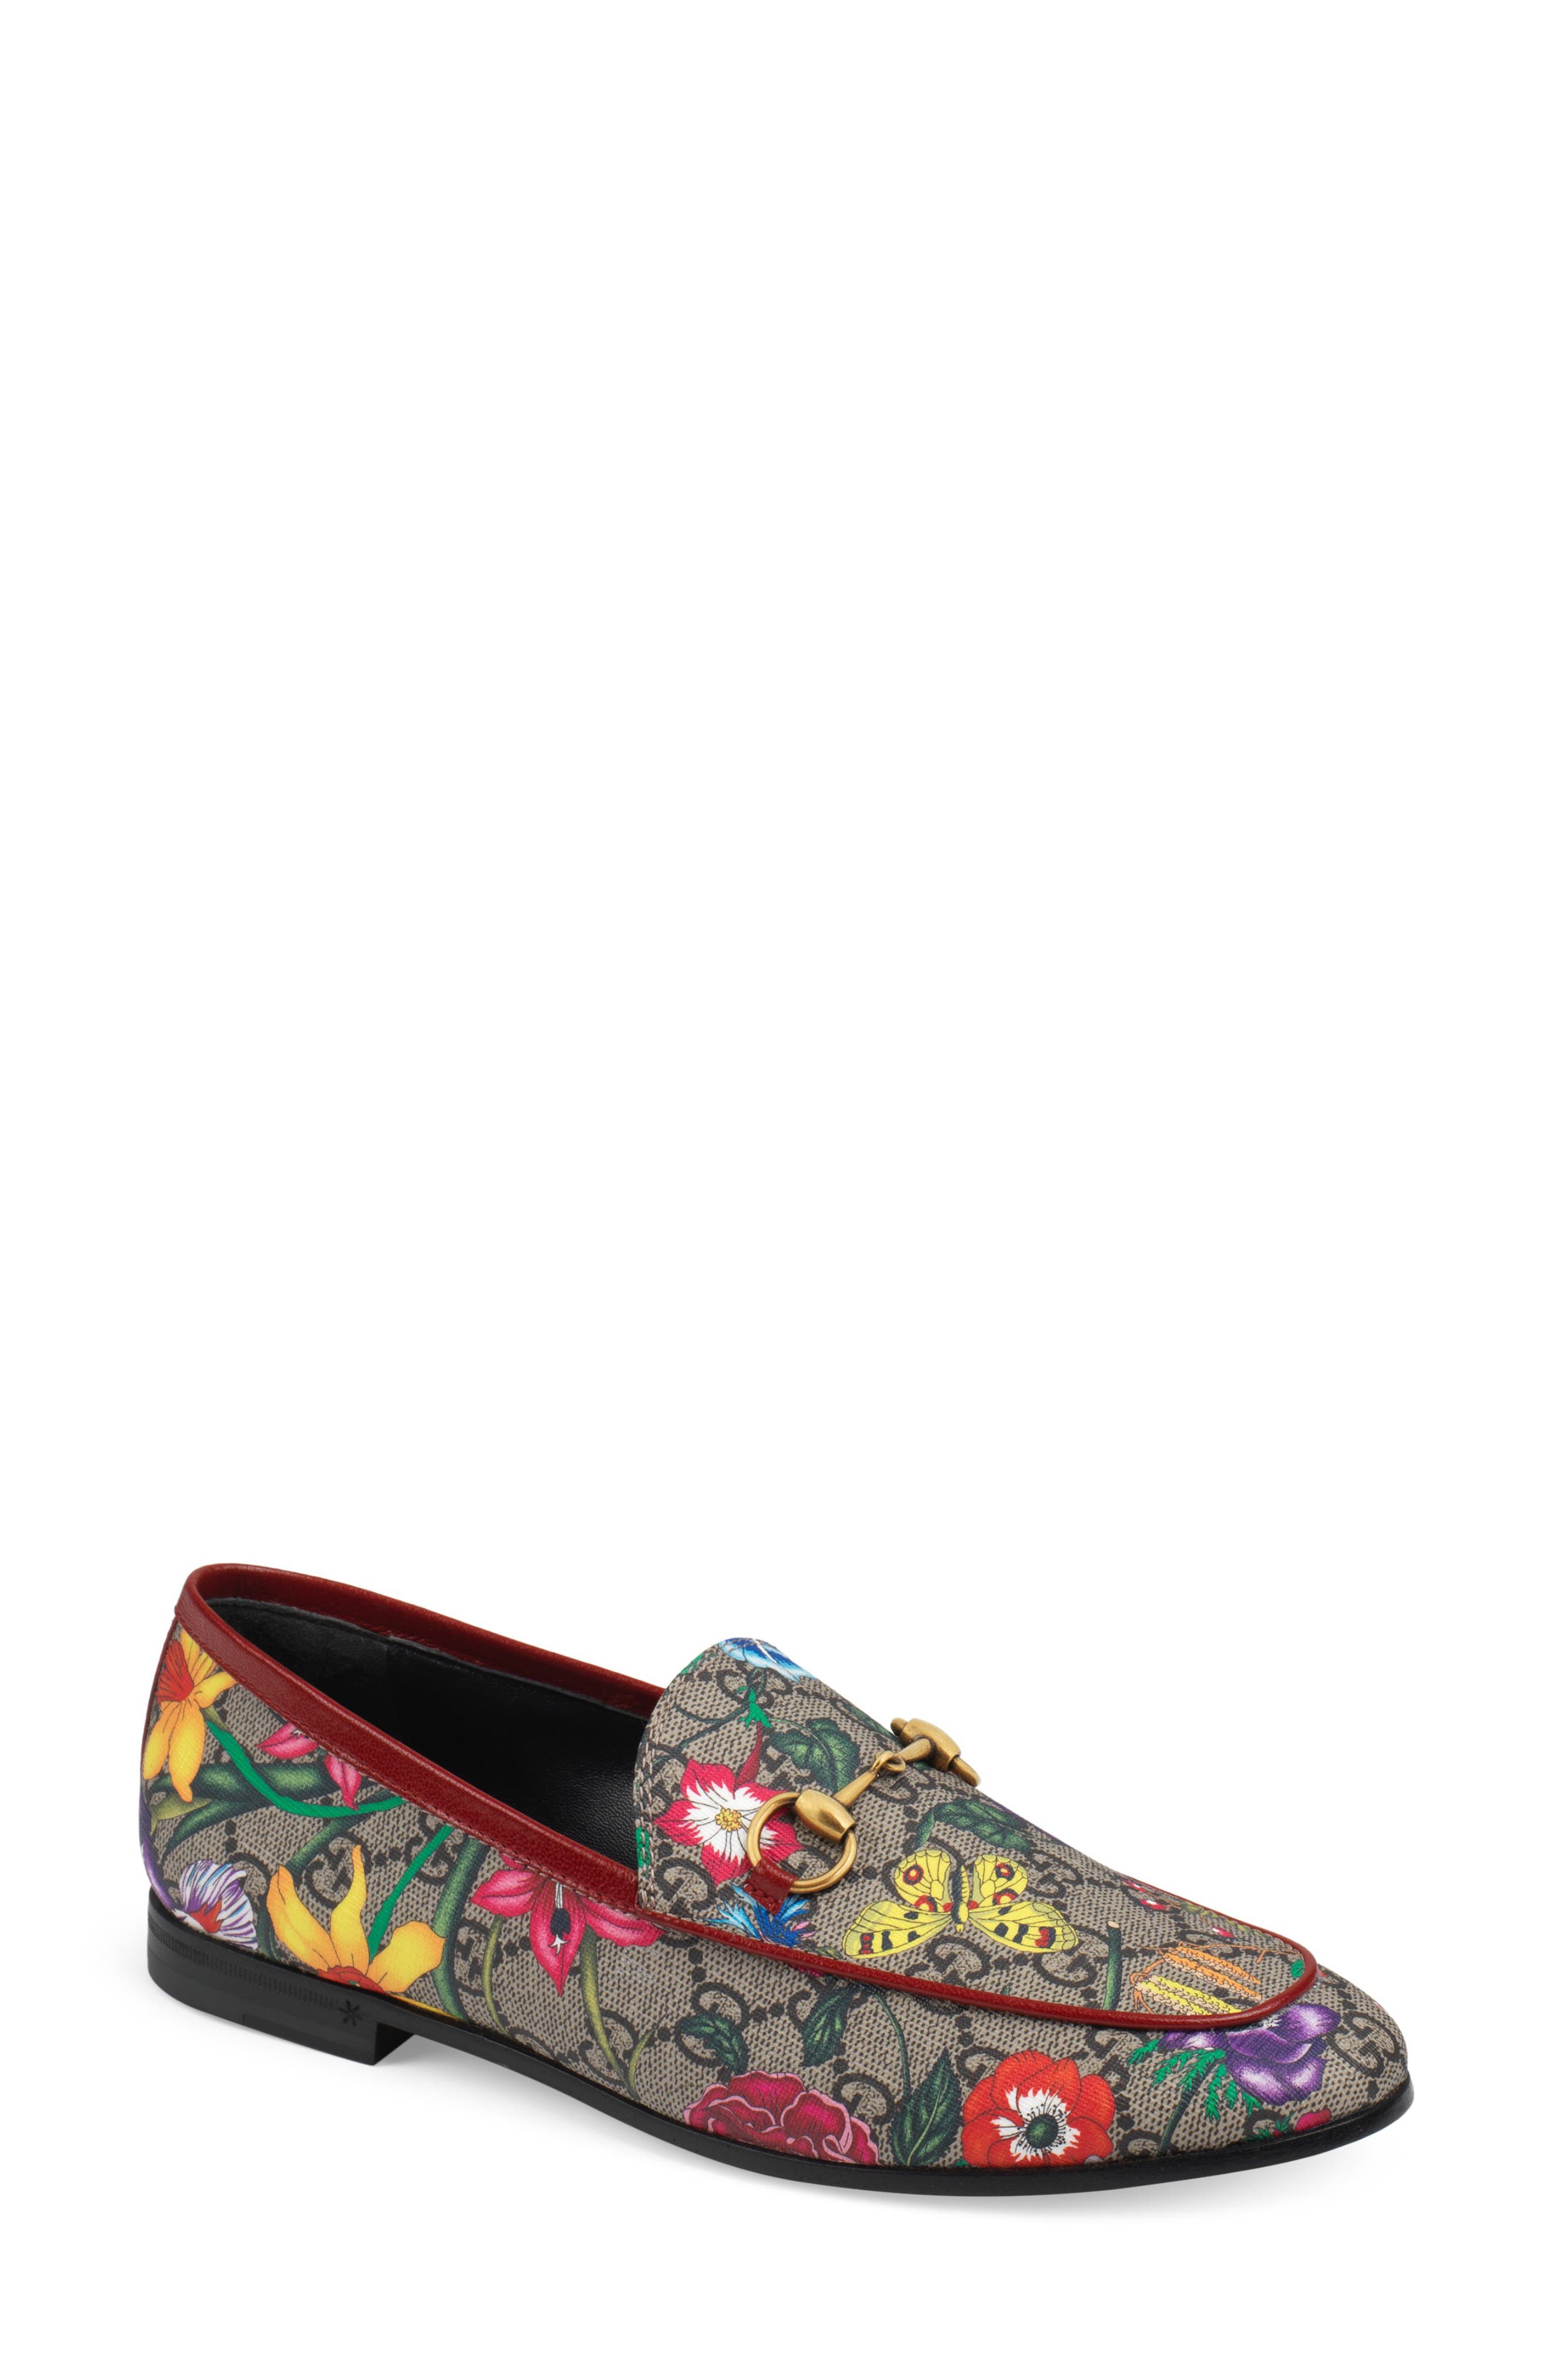 gucci floral loafer